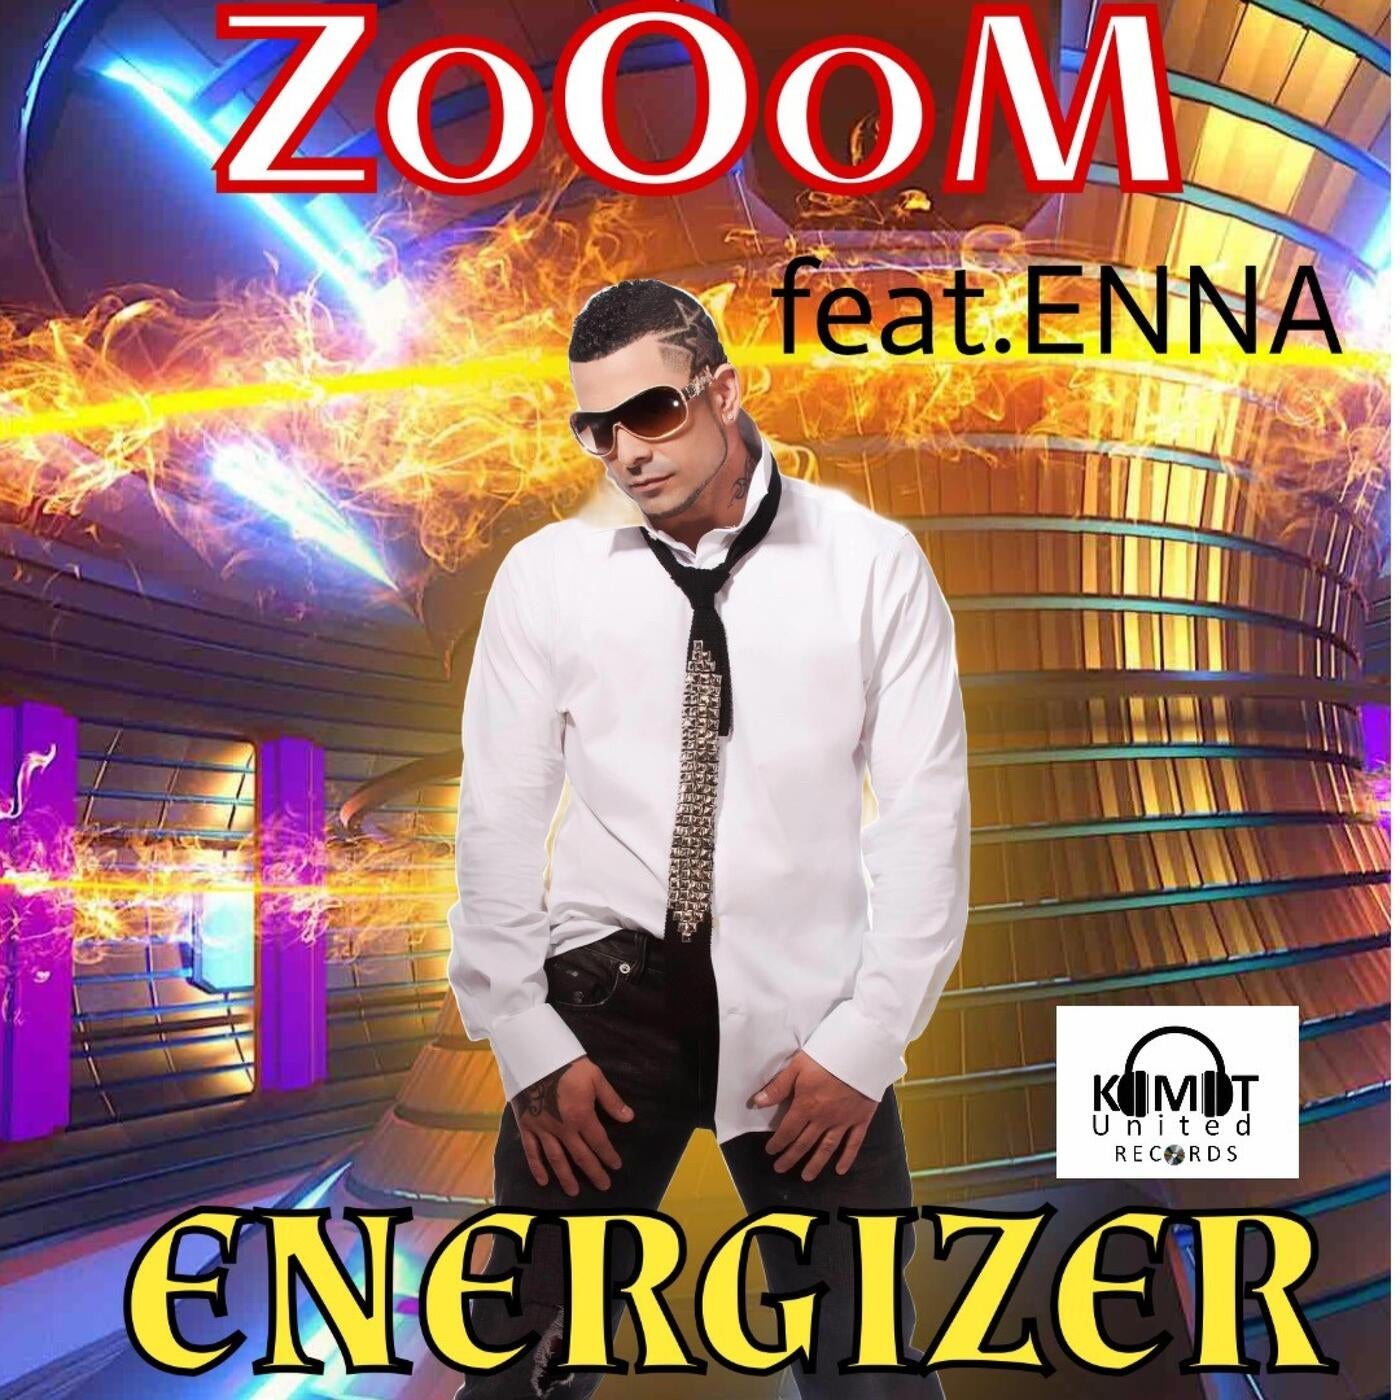 ENERGIZER (feat. ENNA)